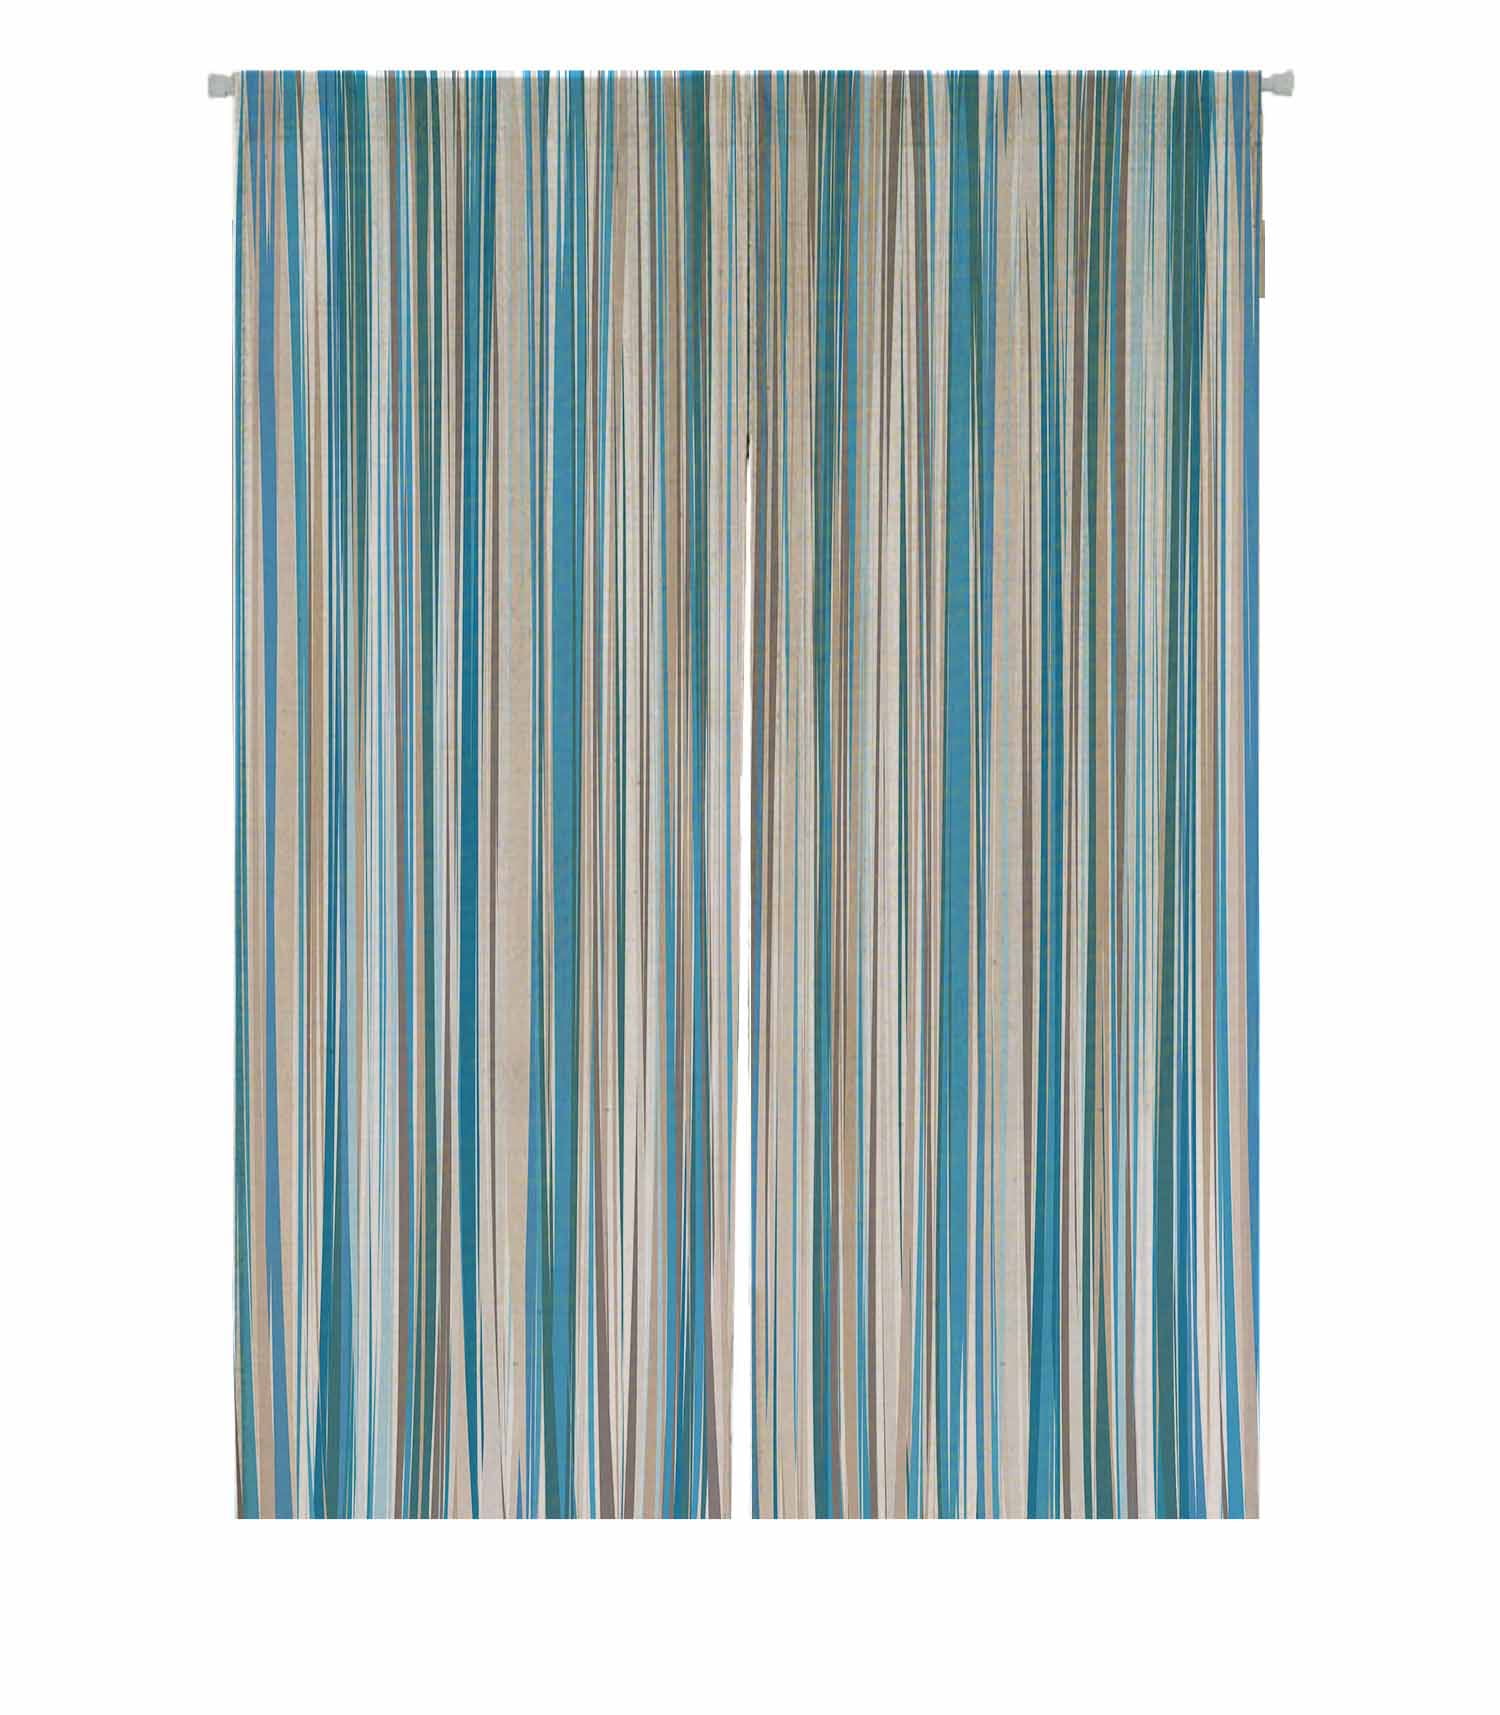 PKQWTM BlueBeigeWhite Vertical Striped Pattern Door Curtain Window Cover Home Decor Hanging